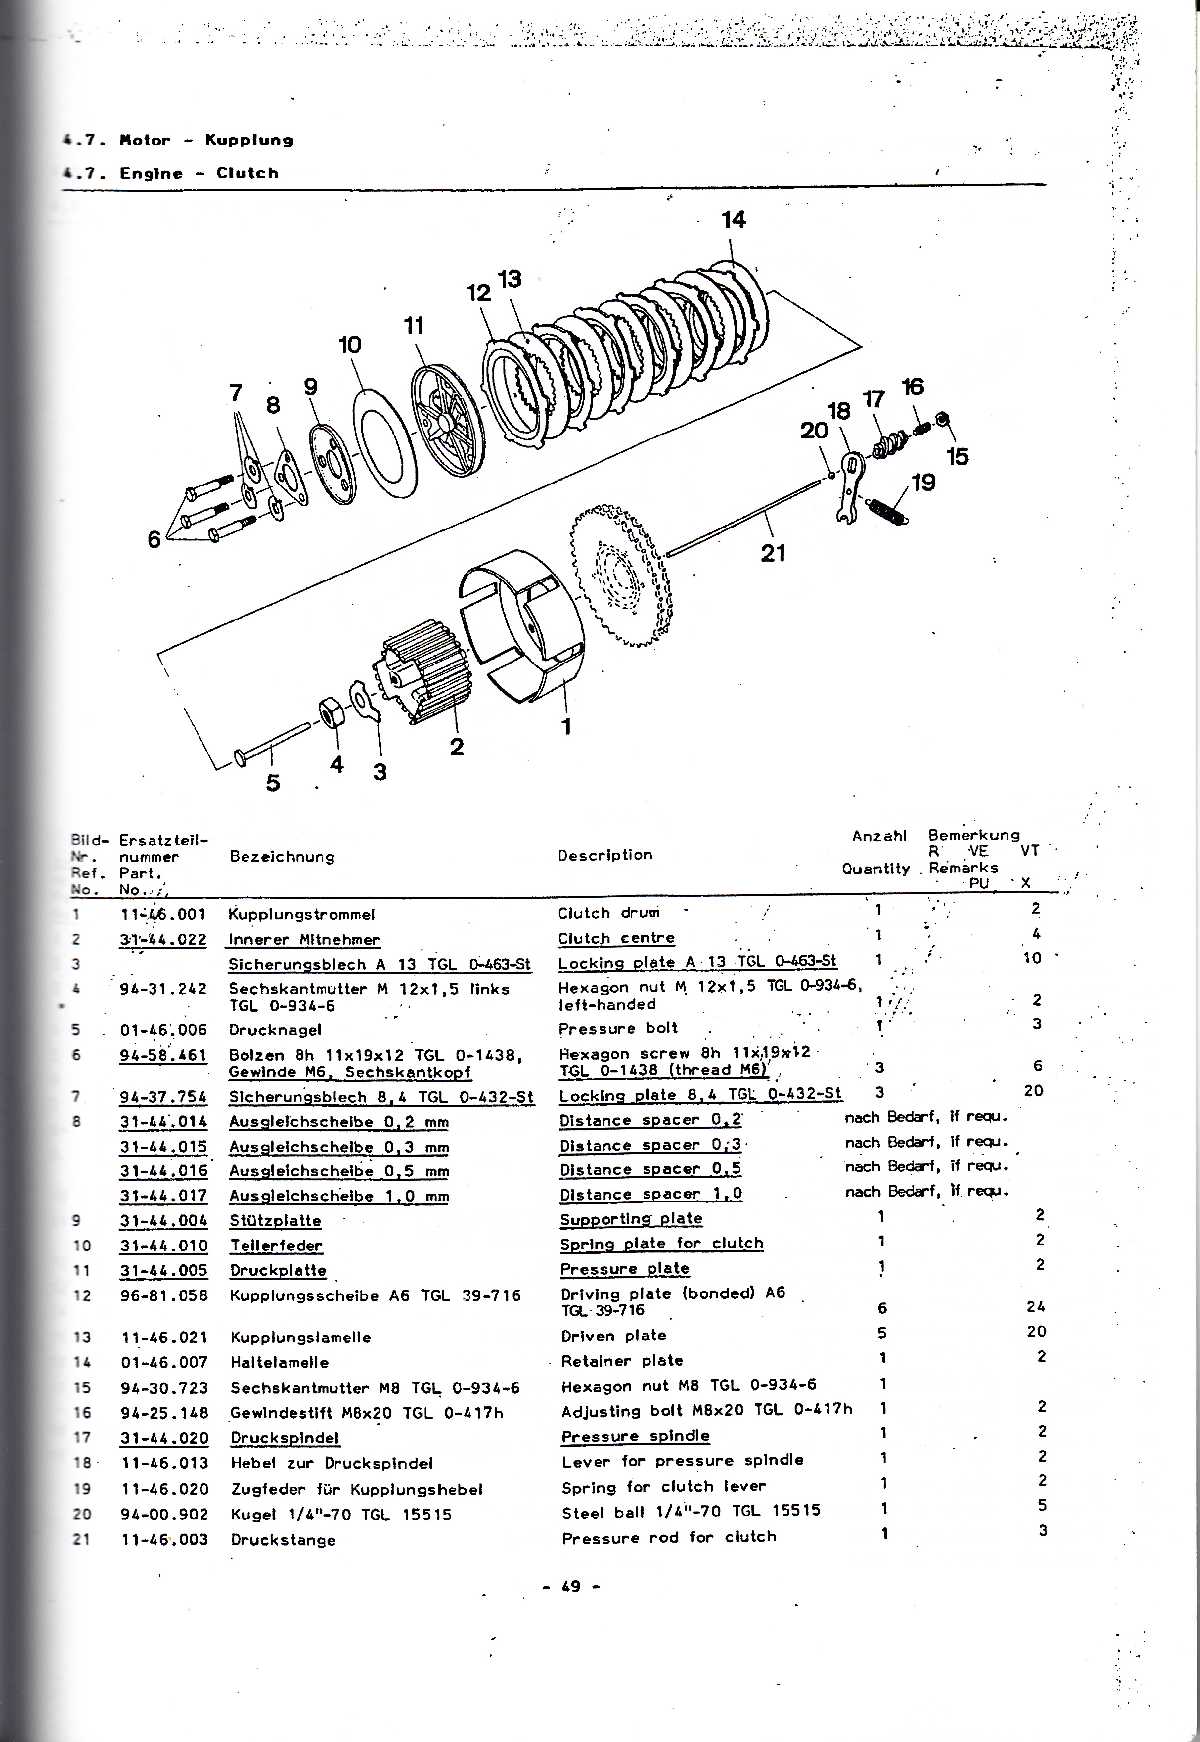 Katalog MZ 150 ETZ, MZ 125 ETZ - 4.7. Engine - Clutch 